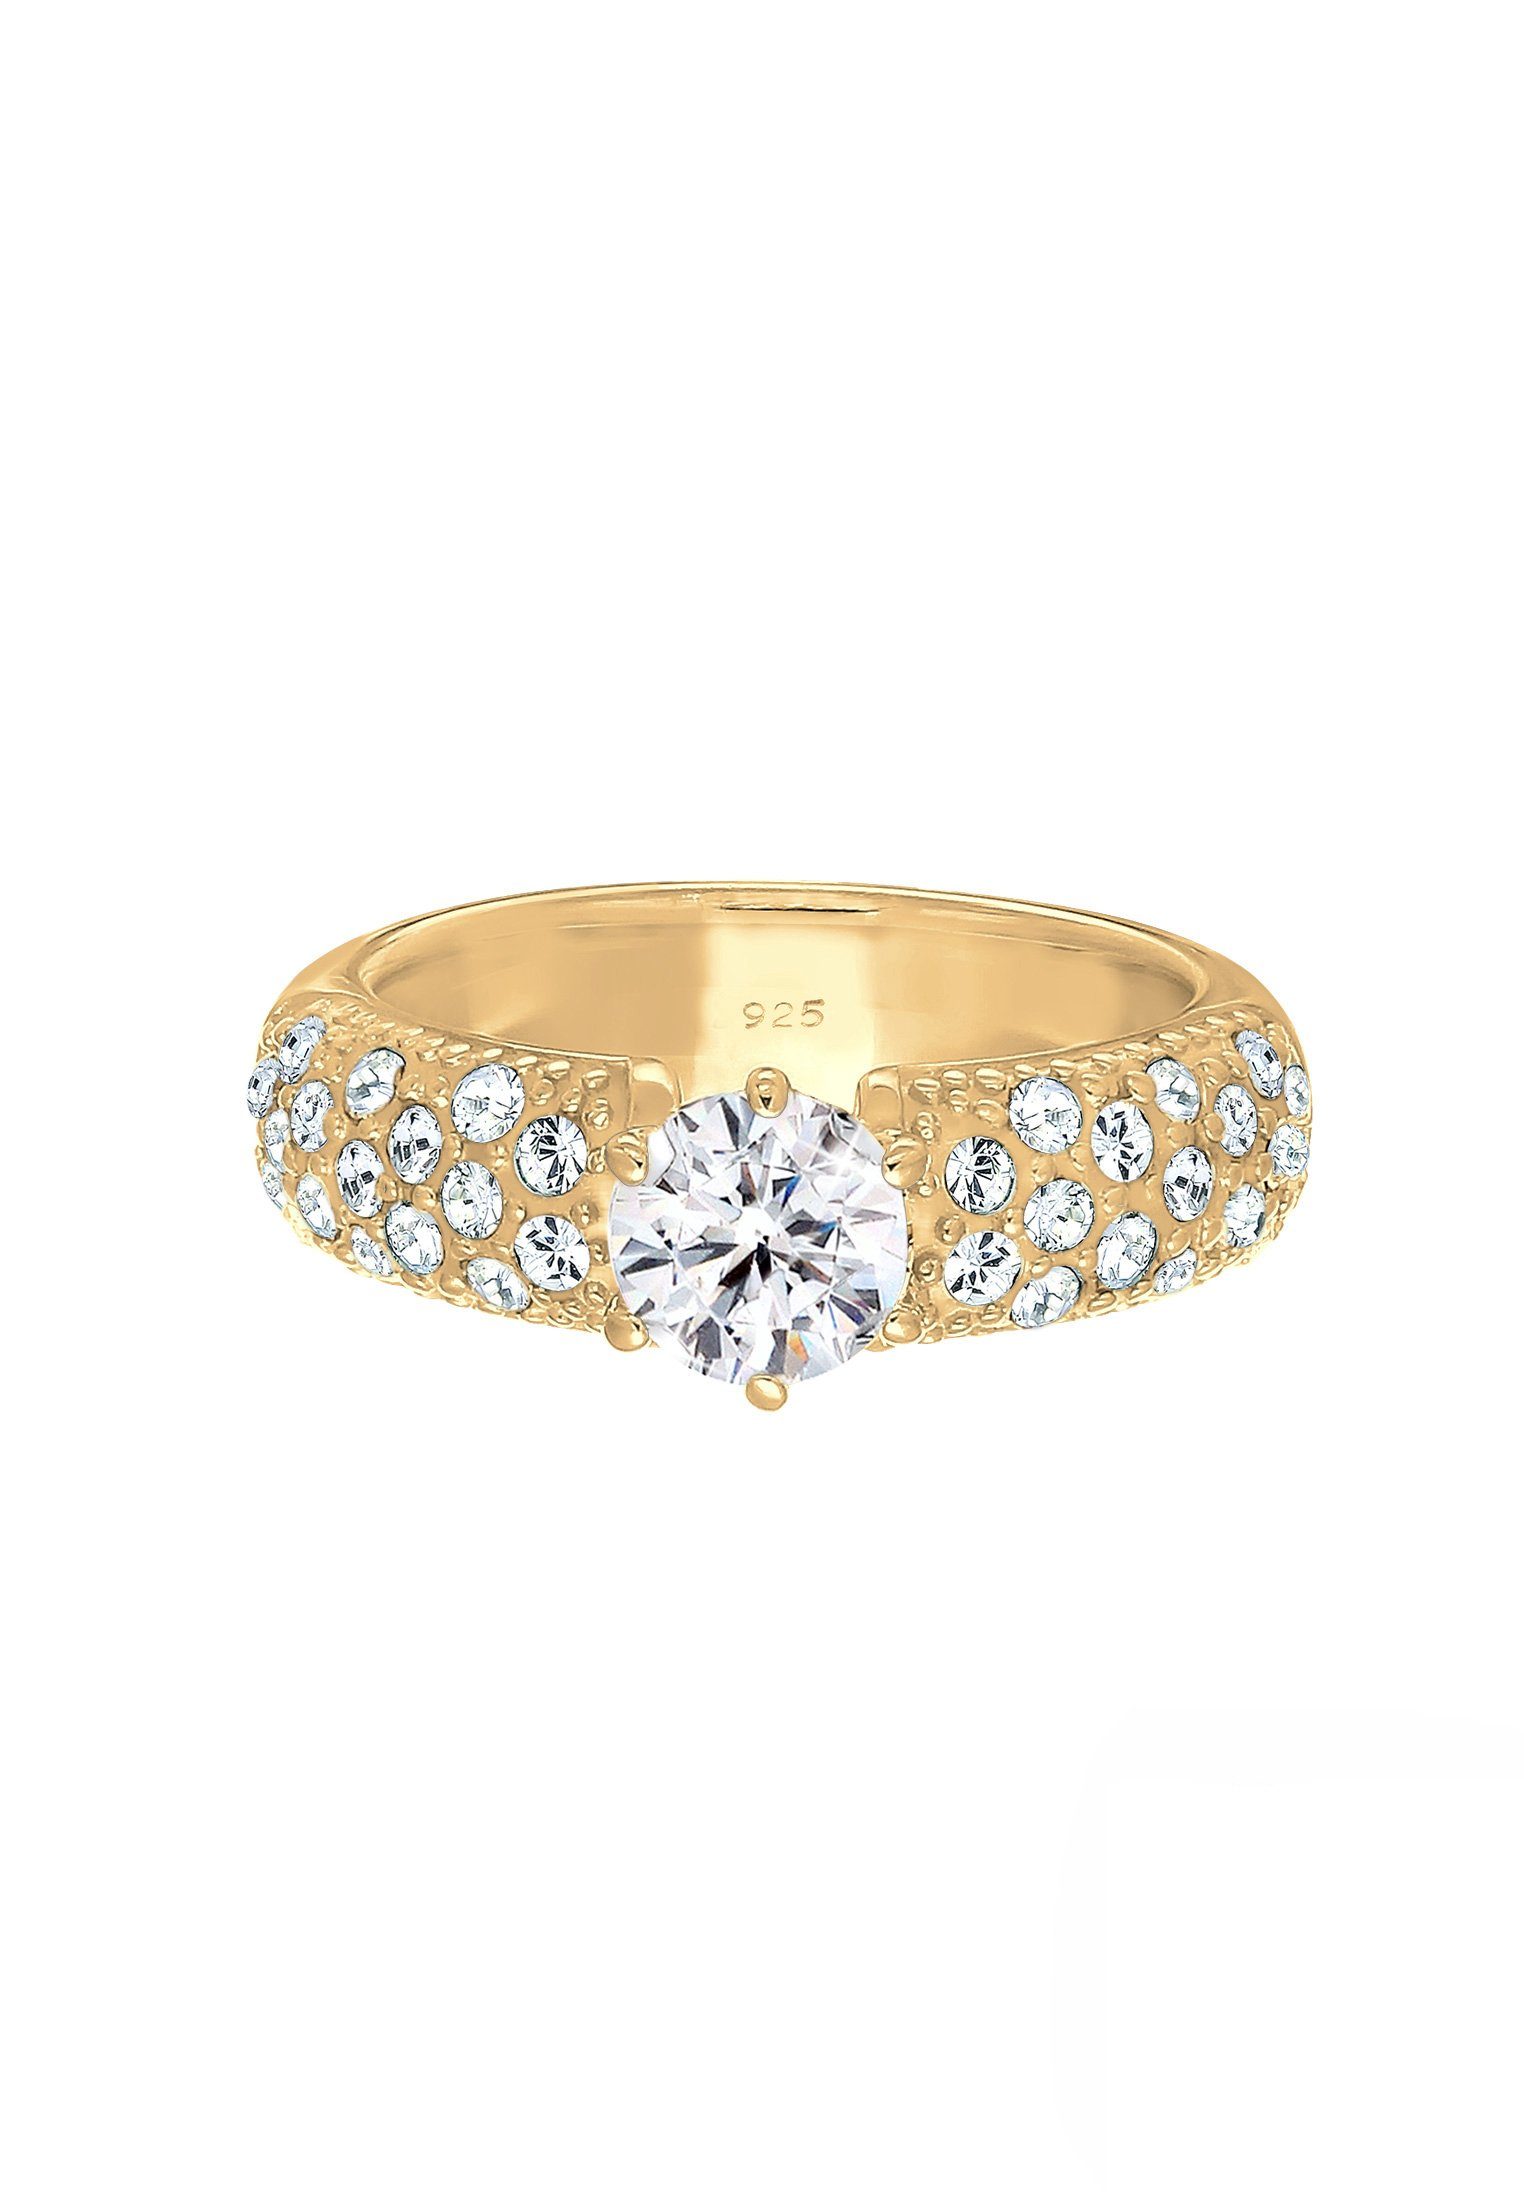 Verlobungsring Elli Silber Verlobungsring Kristalle Premium 925 Gold